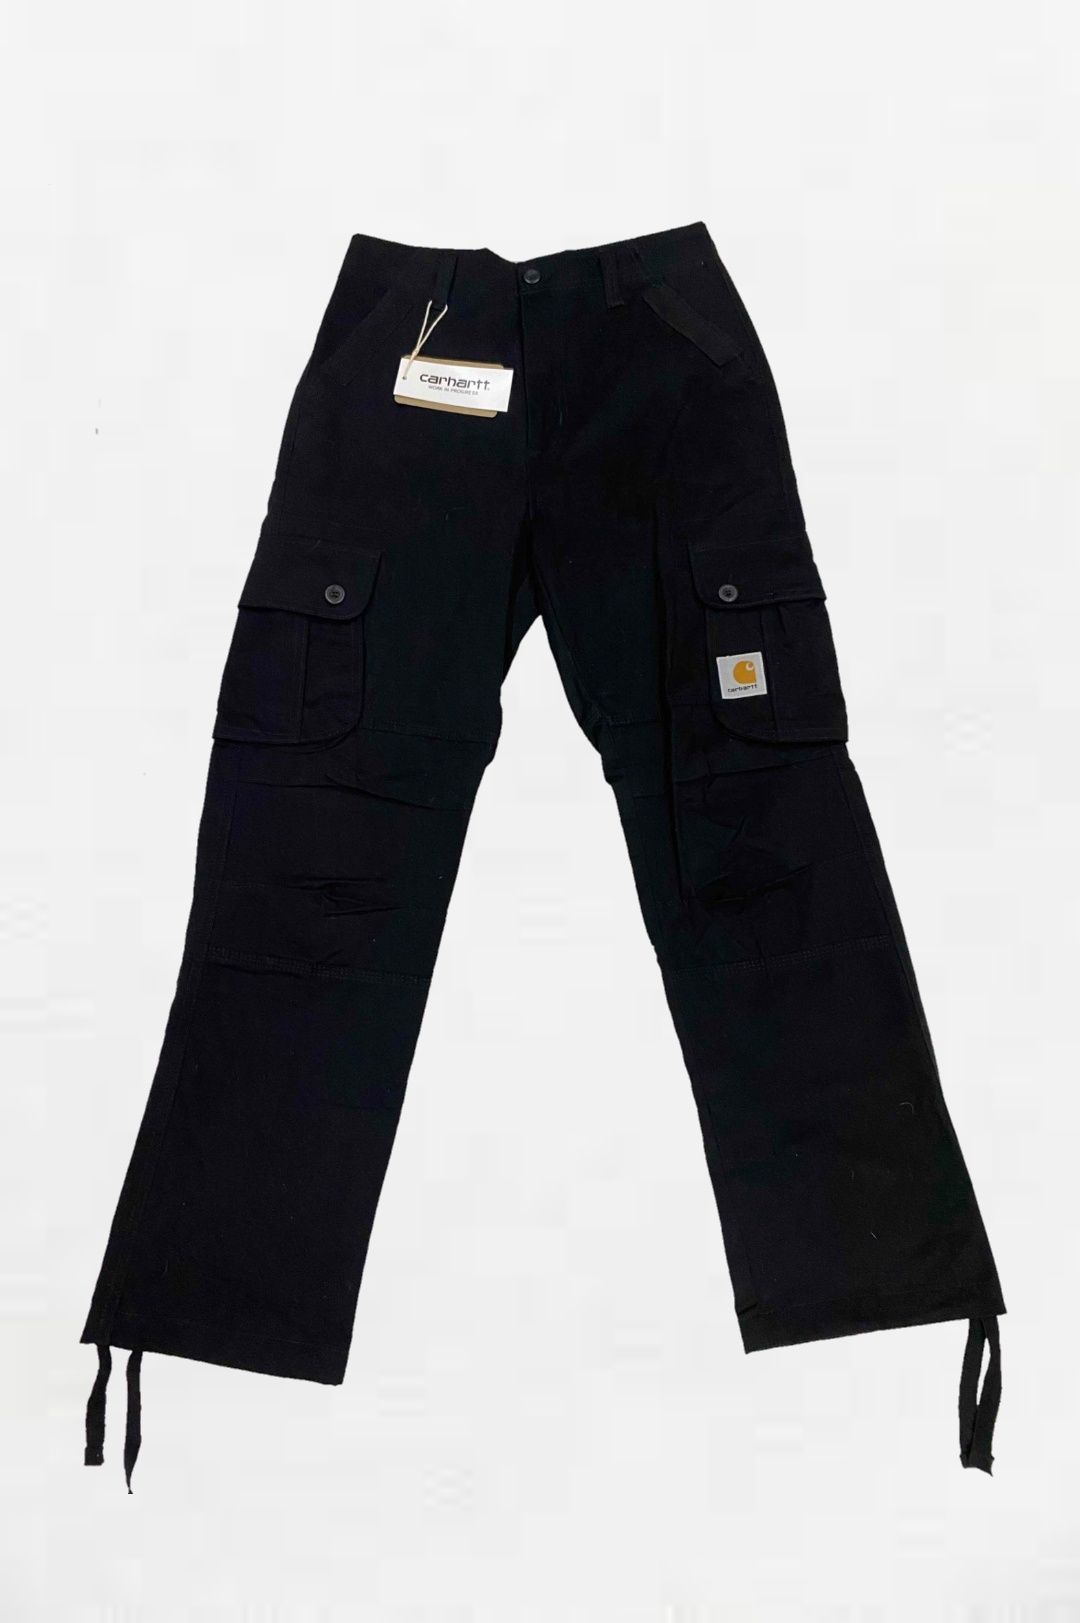 штаны карго carhartt/pants cargo carhartt (cargo carhartt, rappants)